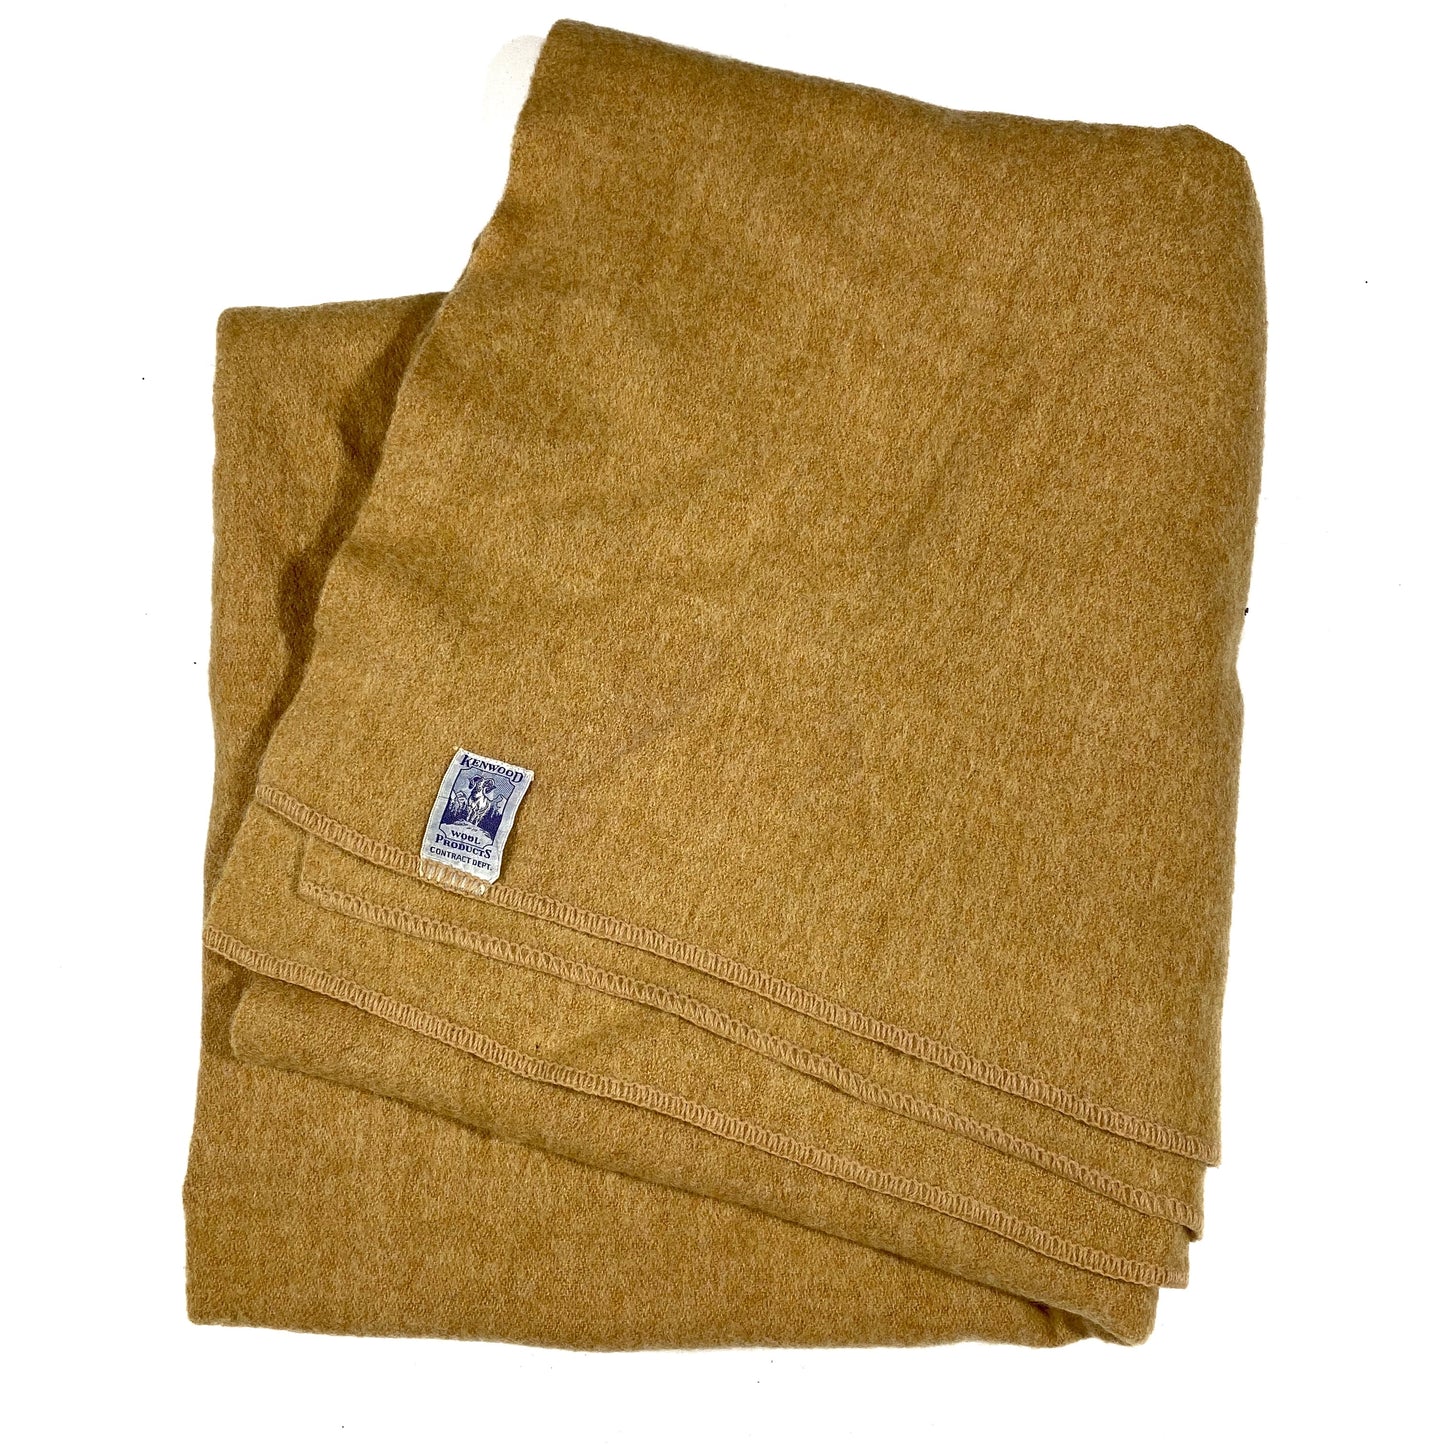 Kenwood wool products blanket. 46x48